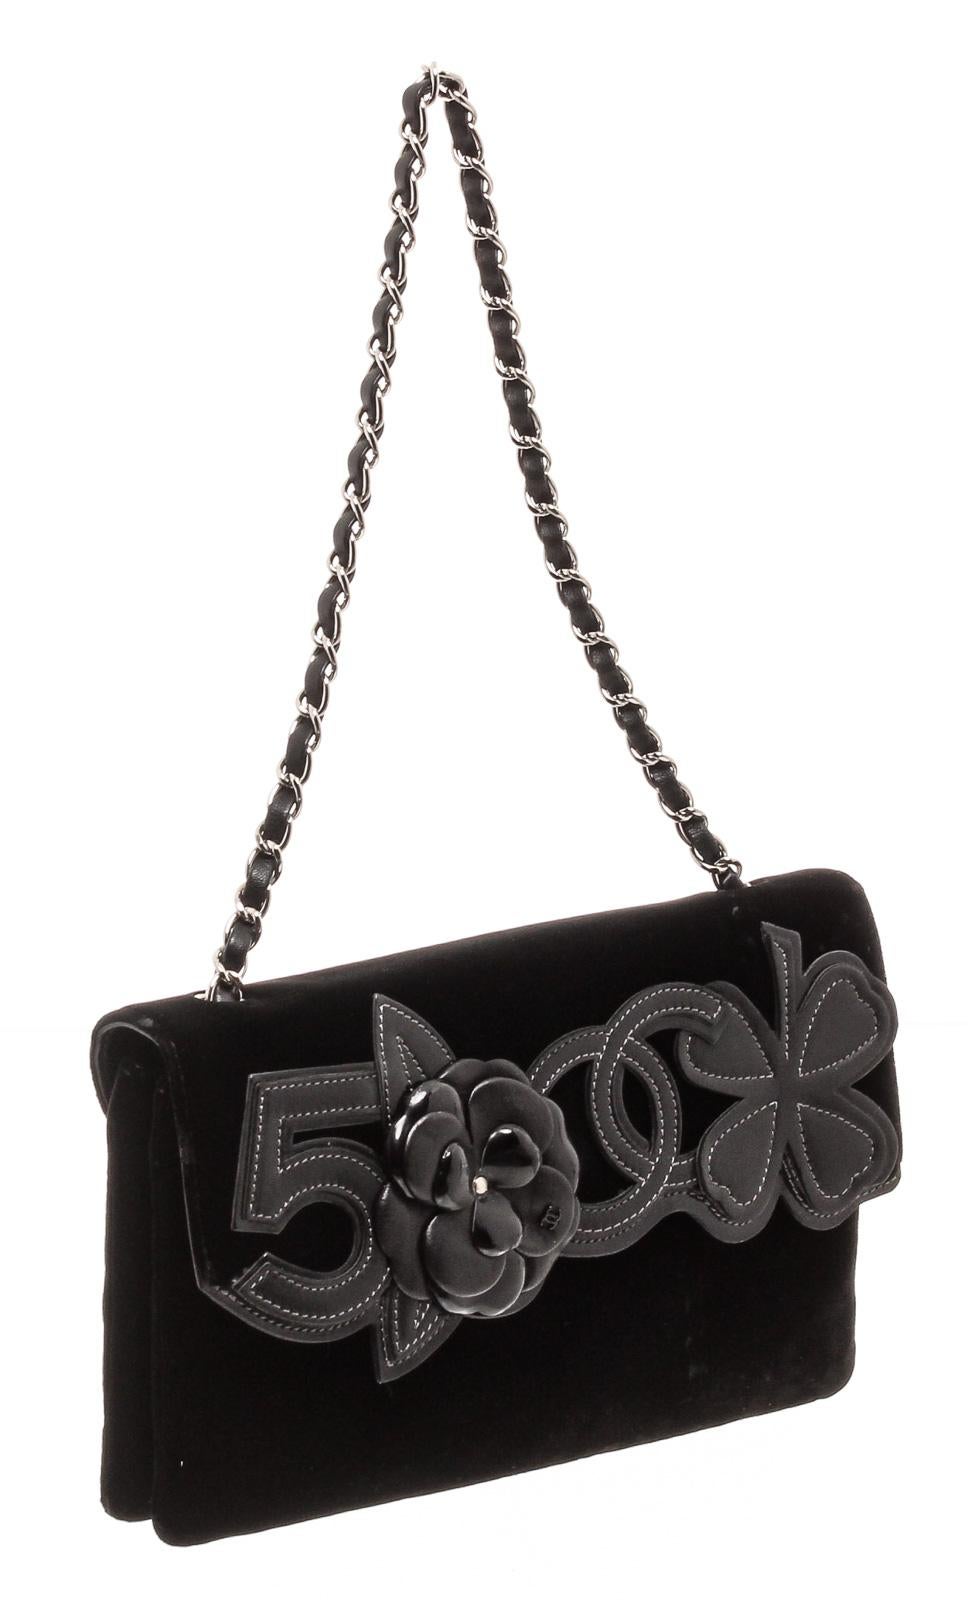 Black velvet Chanel Precious Symbols Flap Bag with ruthenium hardware, tonal lambskin trim, single woven chain-link shoulder strap, Precious Symbols appliqués at front flap, dual interior compartments, tonal logo jacquard lining, single zip pocket